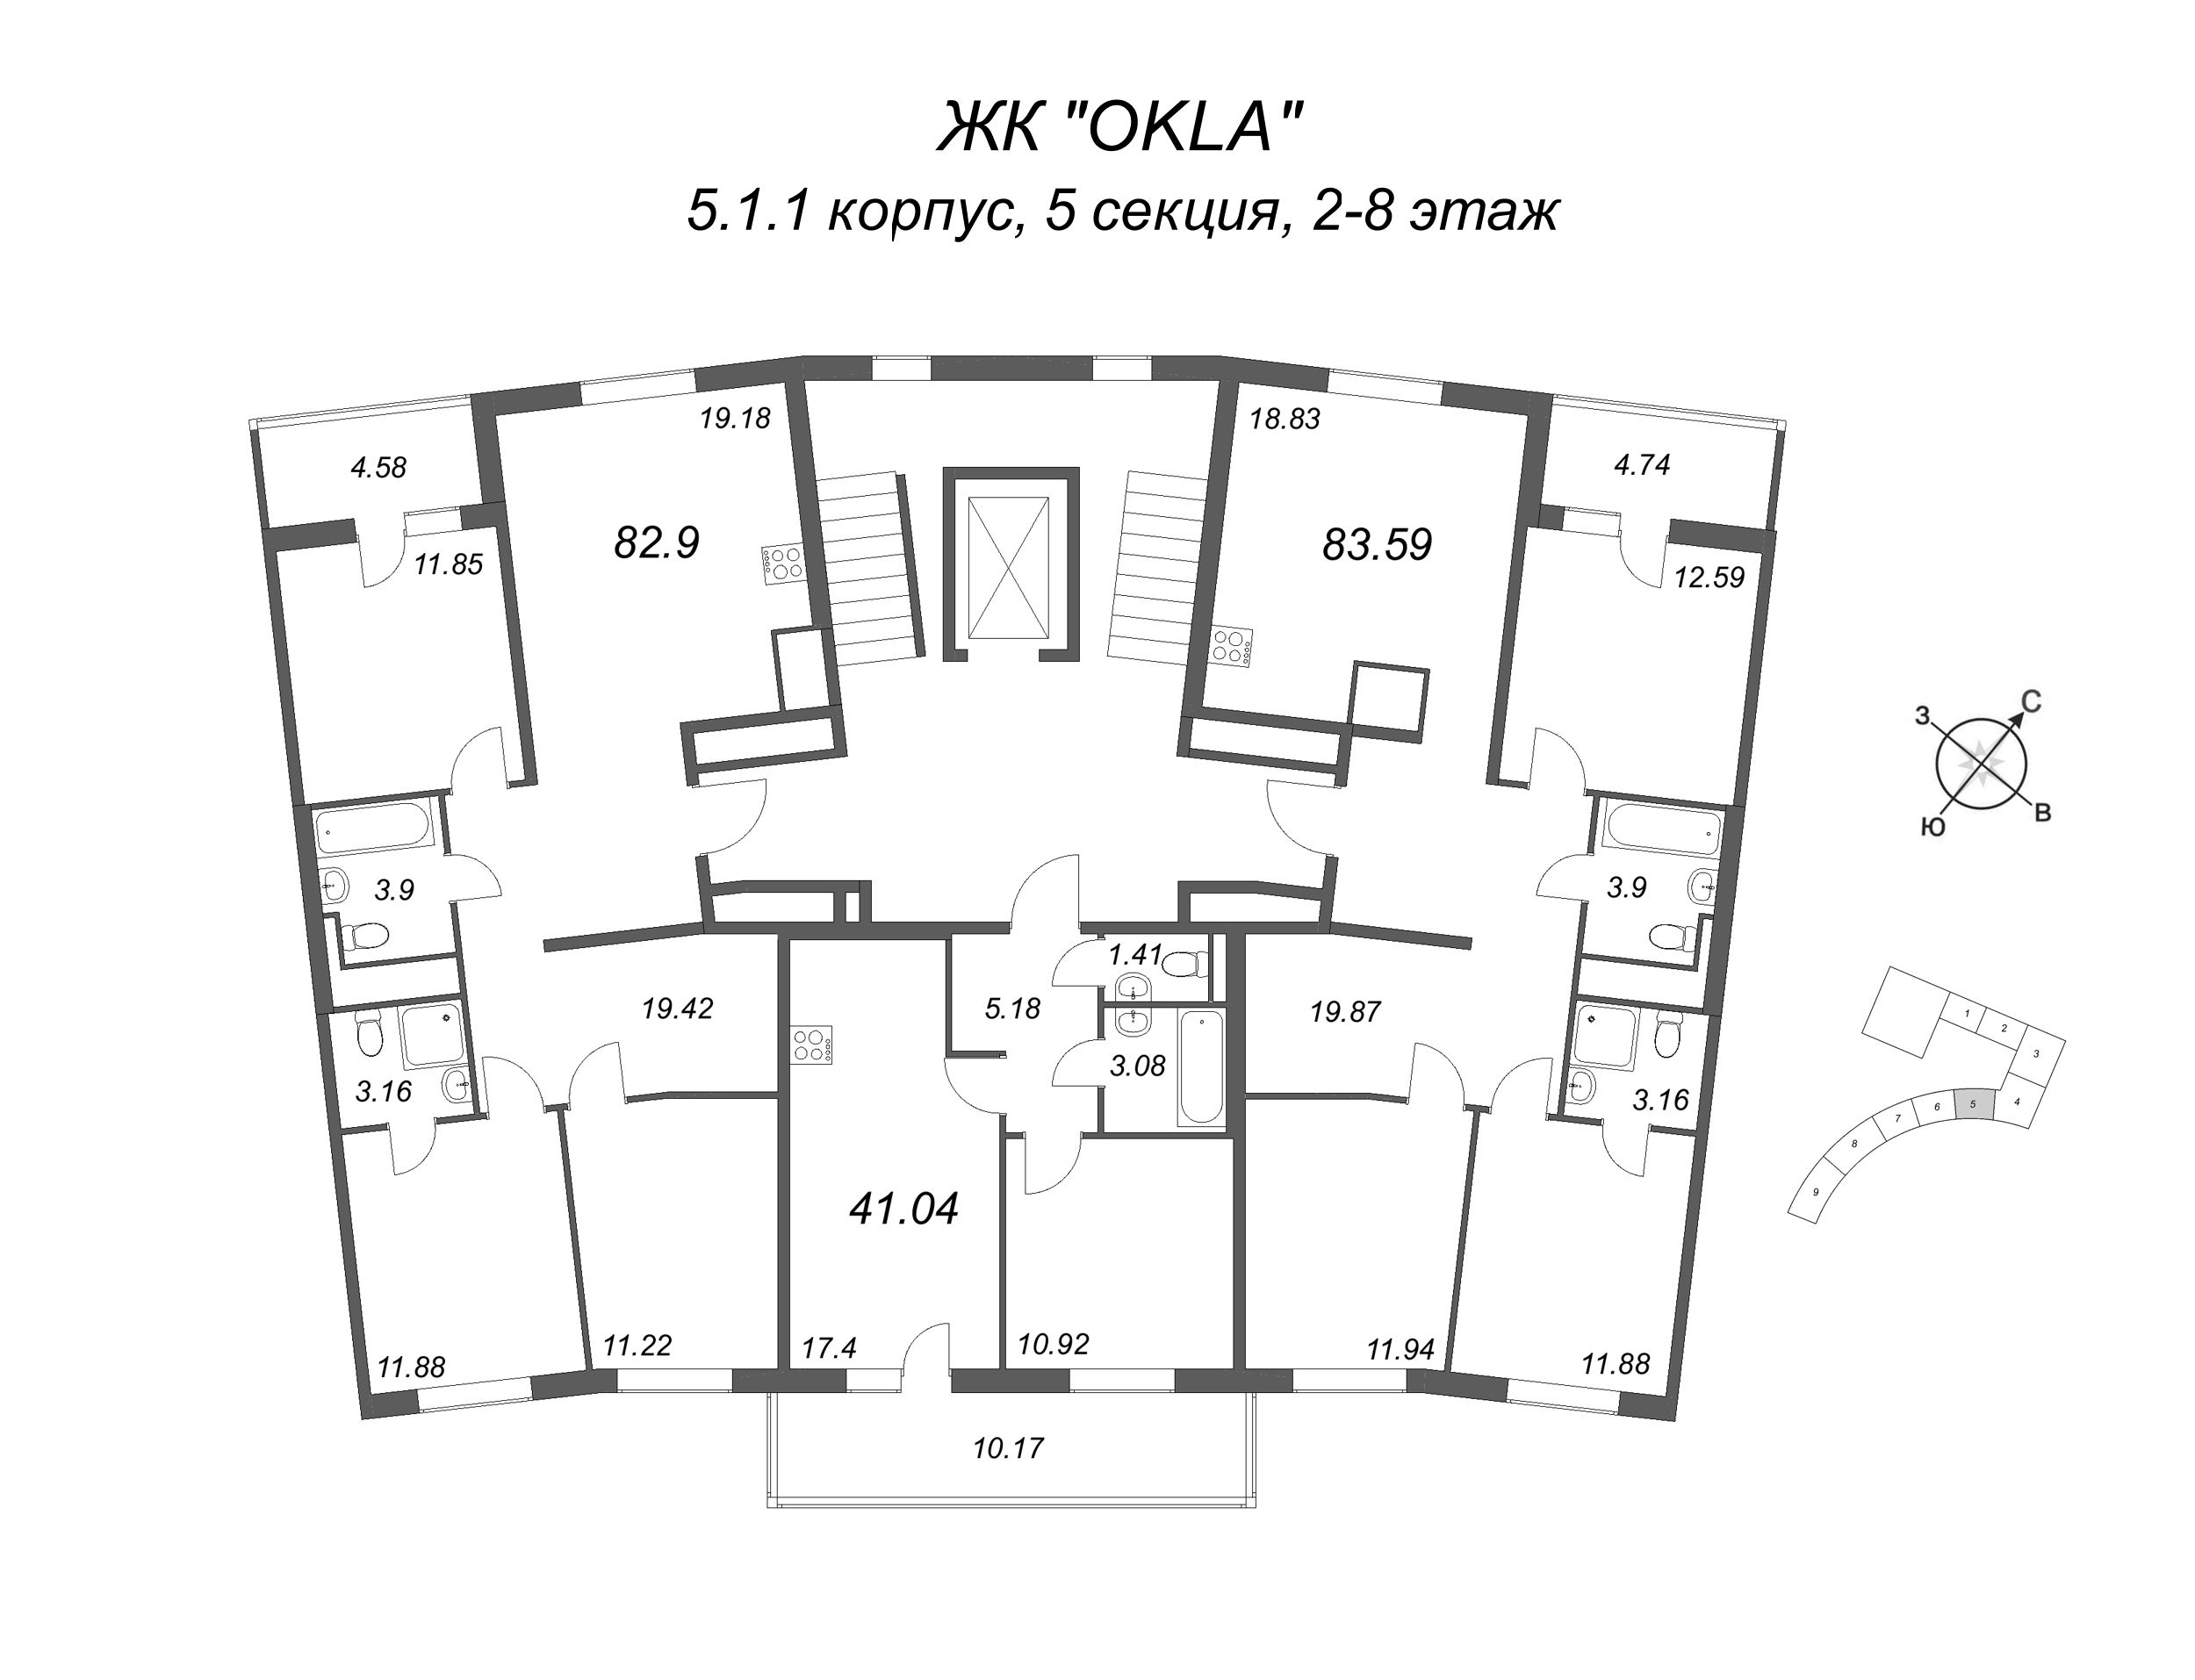 4-комнатная (Евро) квартира, 85.19 м² - планировка этажа